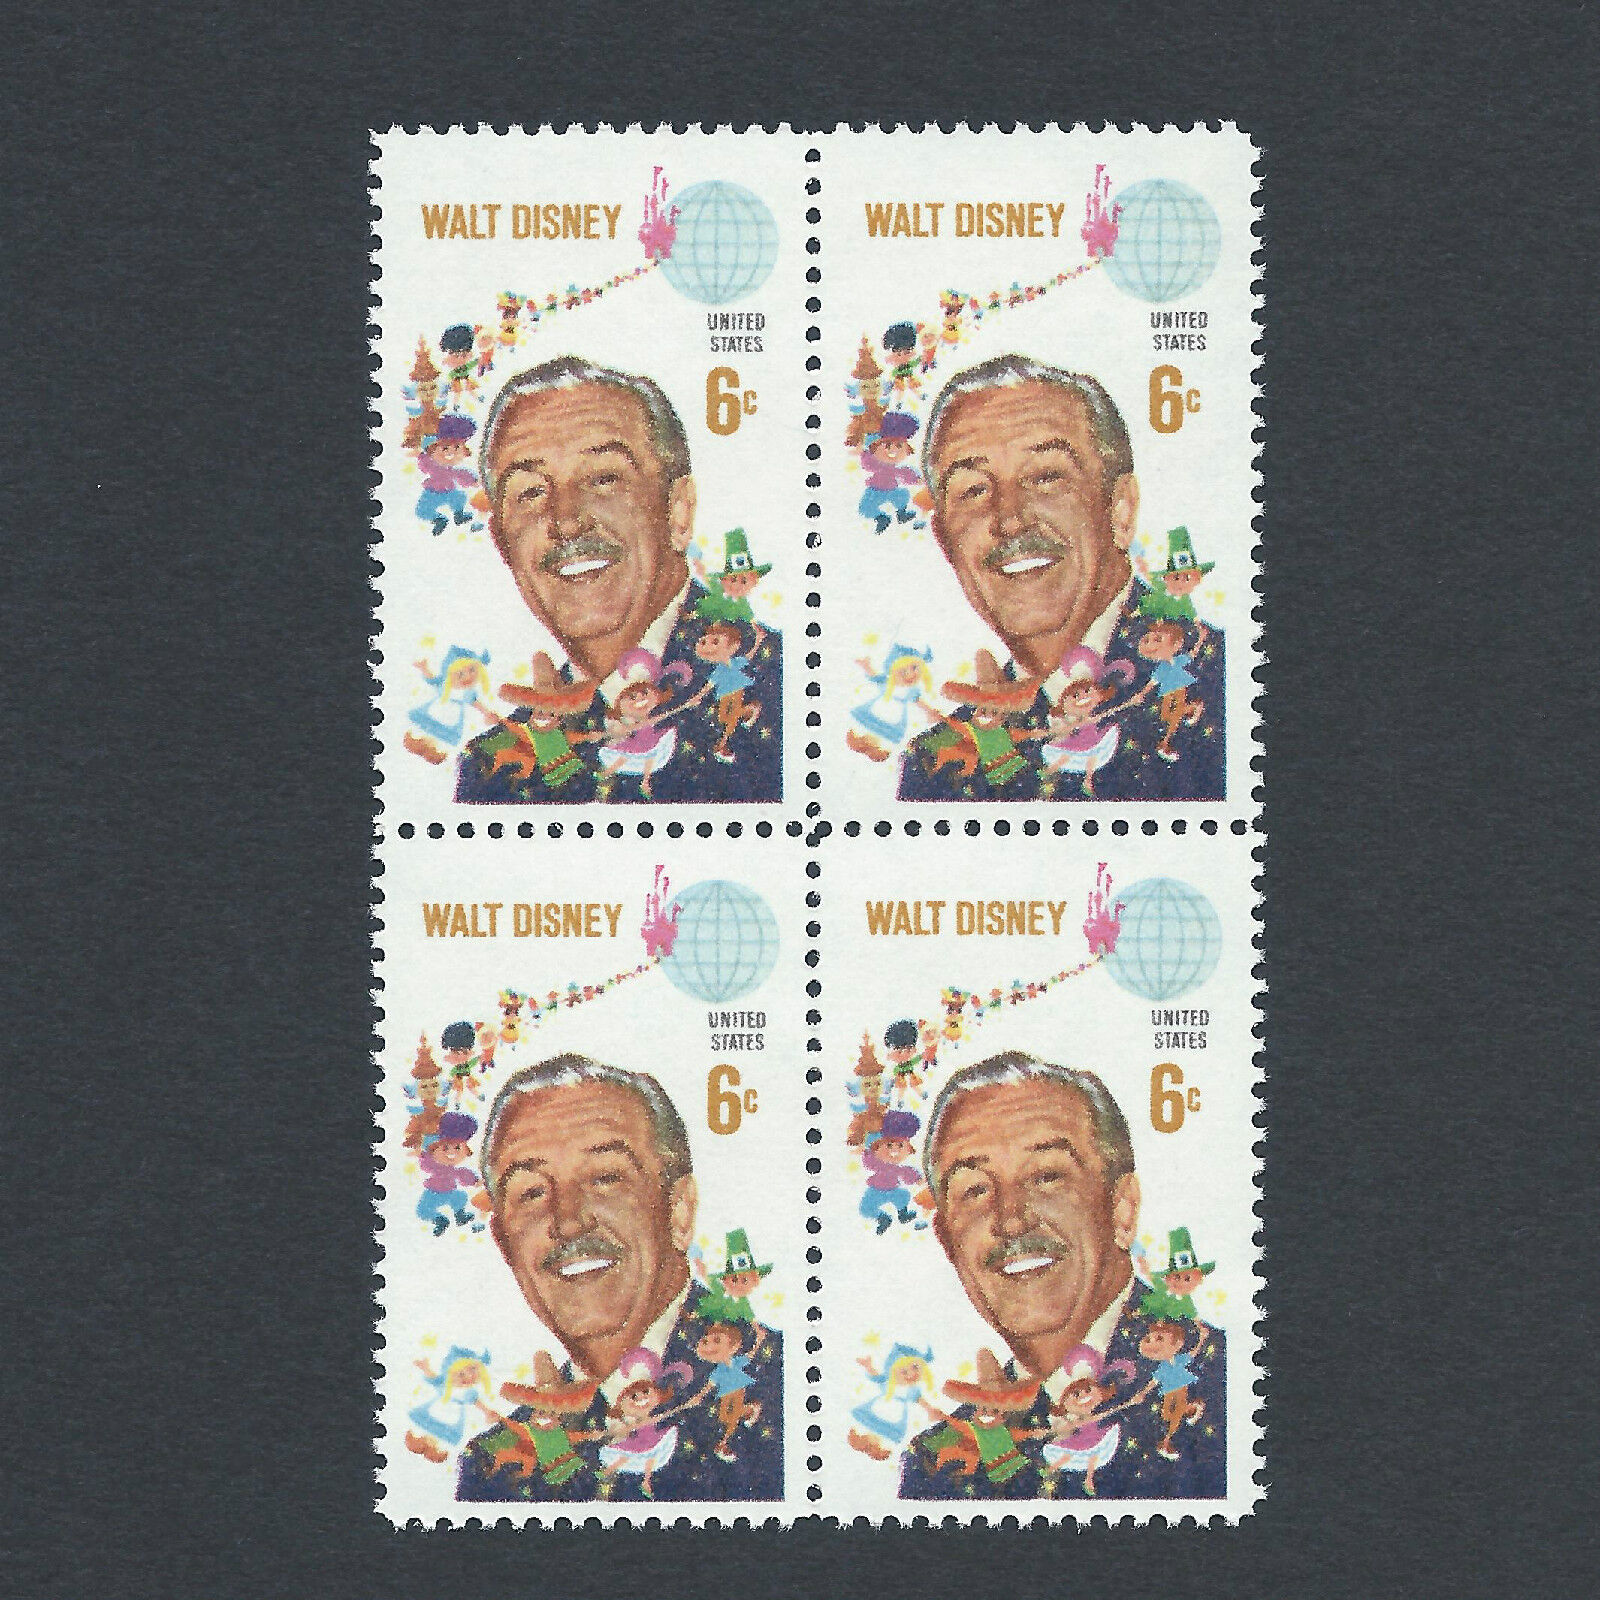 Walt Disney - Vintage Mint Set of 4 Stamps 48 Years Old